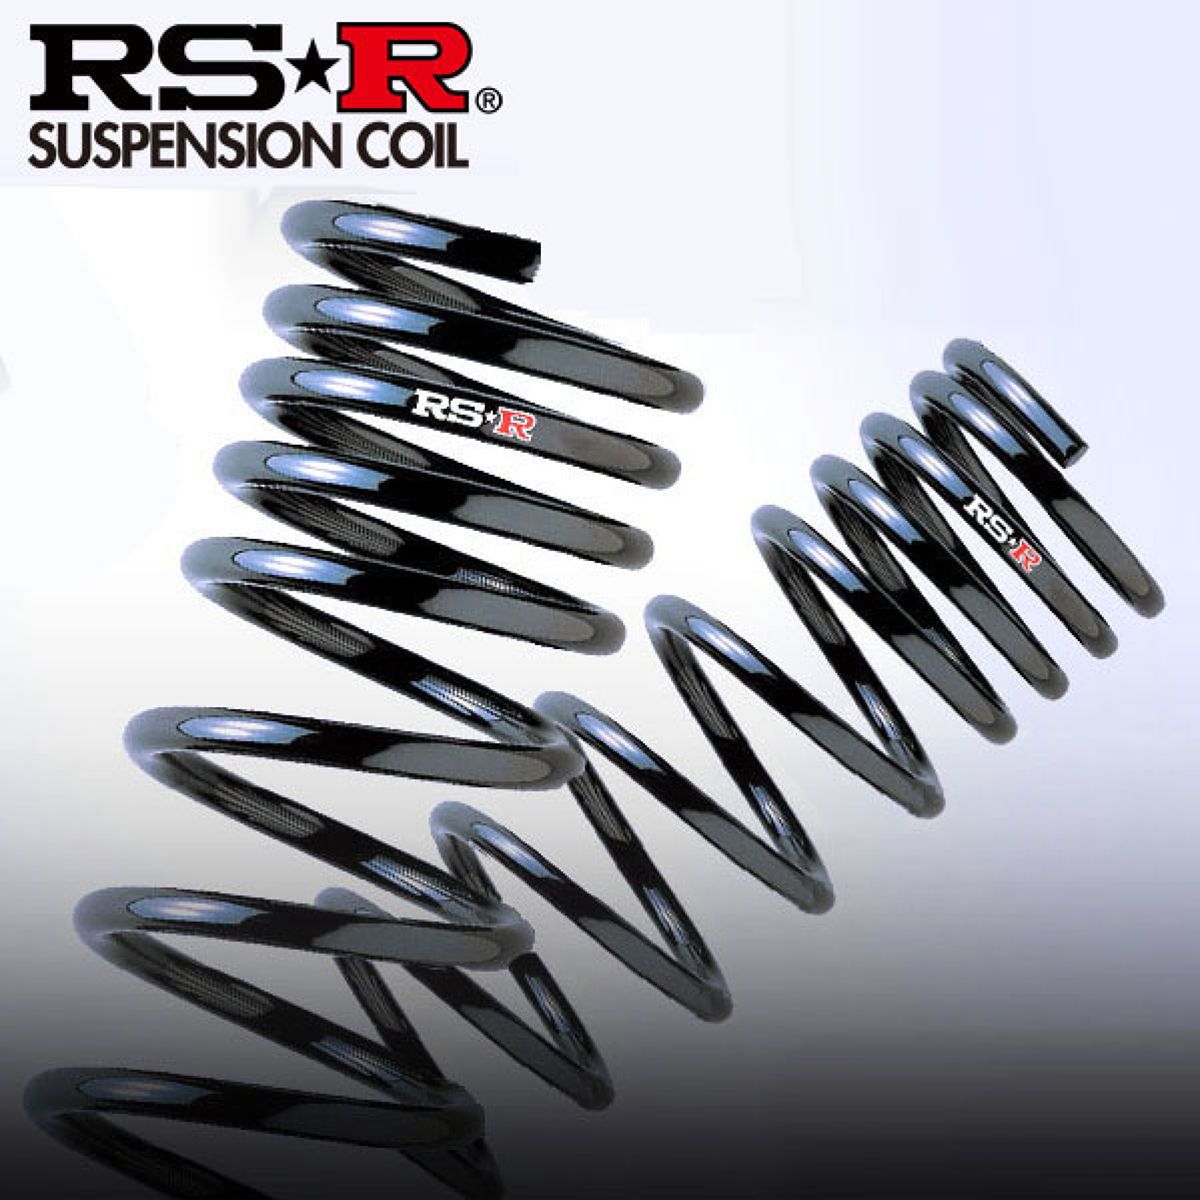 RSR RS★R DOWN サスペンション トヨタ カローラスパシオ ZZE124N/カローラフィールダー NZE144G/リア用/T624WR